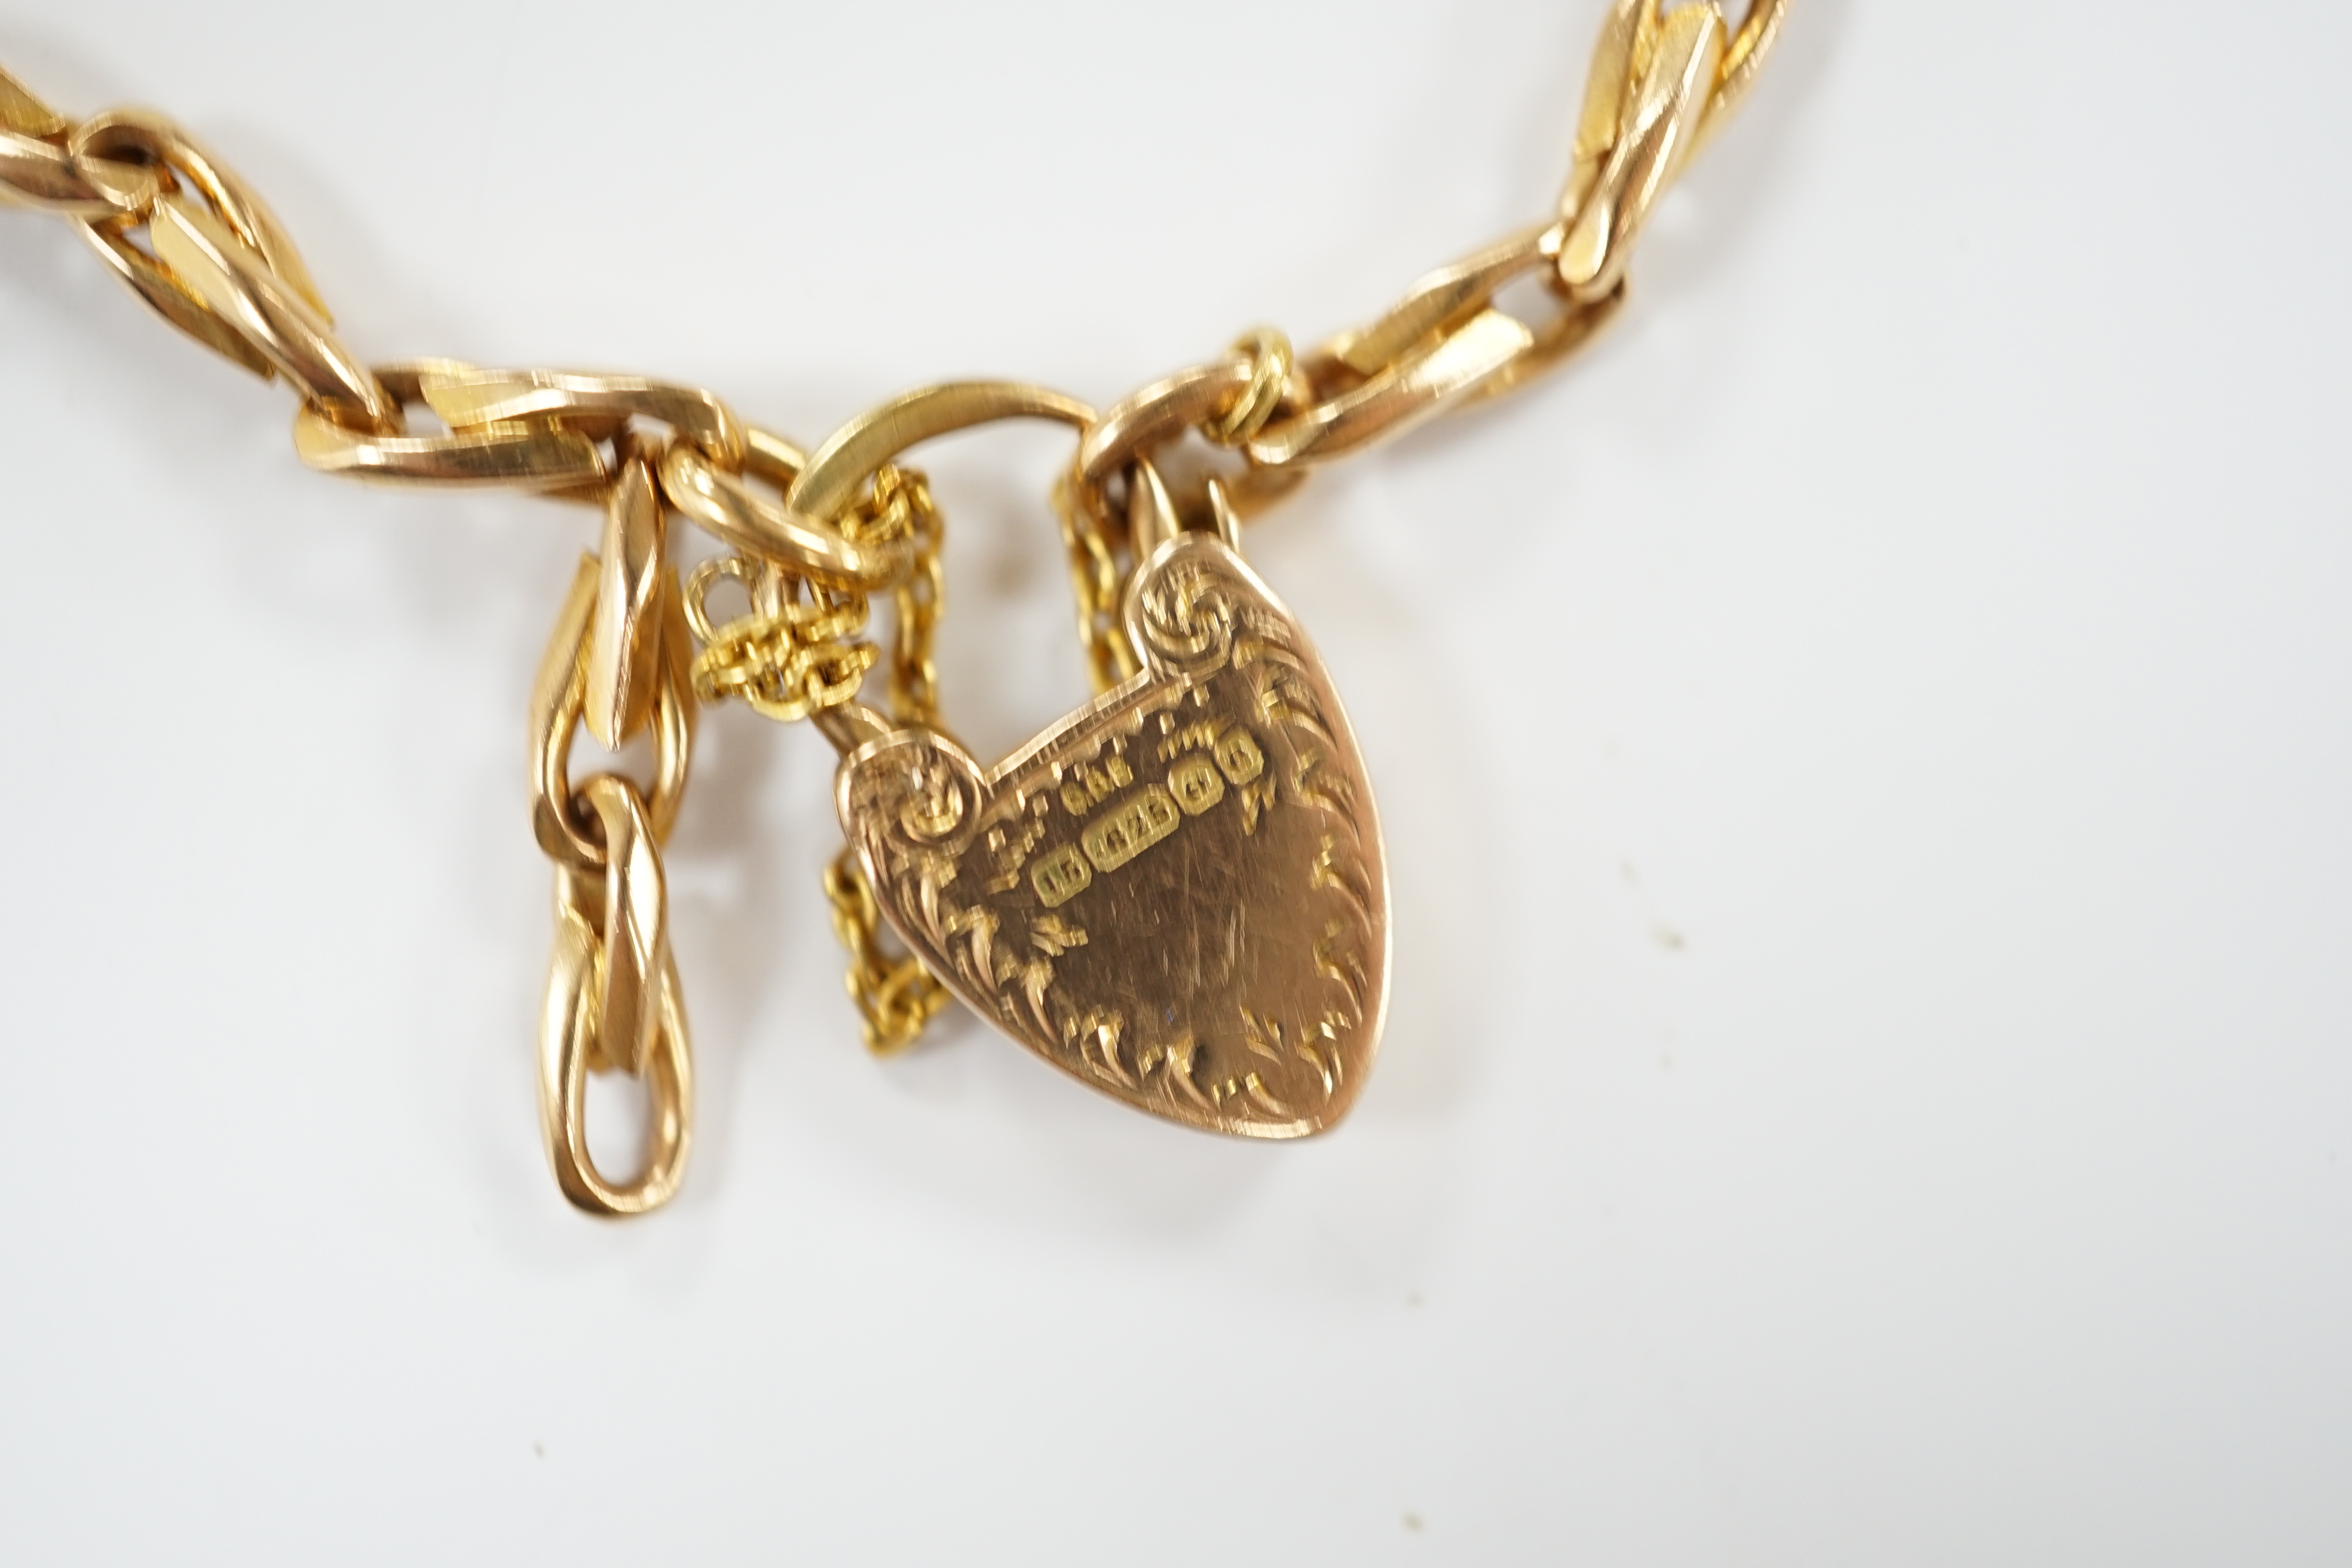 An Edwardian 15ct gold oval link bracelet with heart shape padlock clasp, 18cm, 24.6 grams.